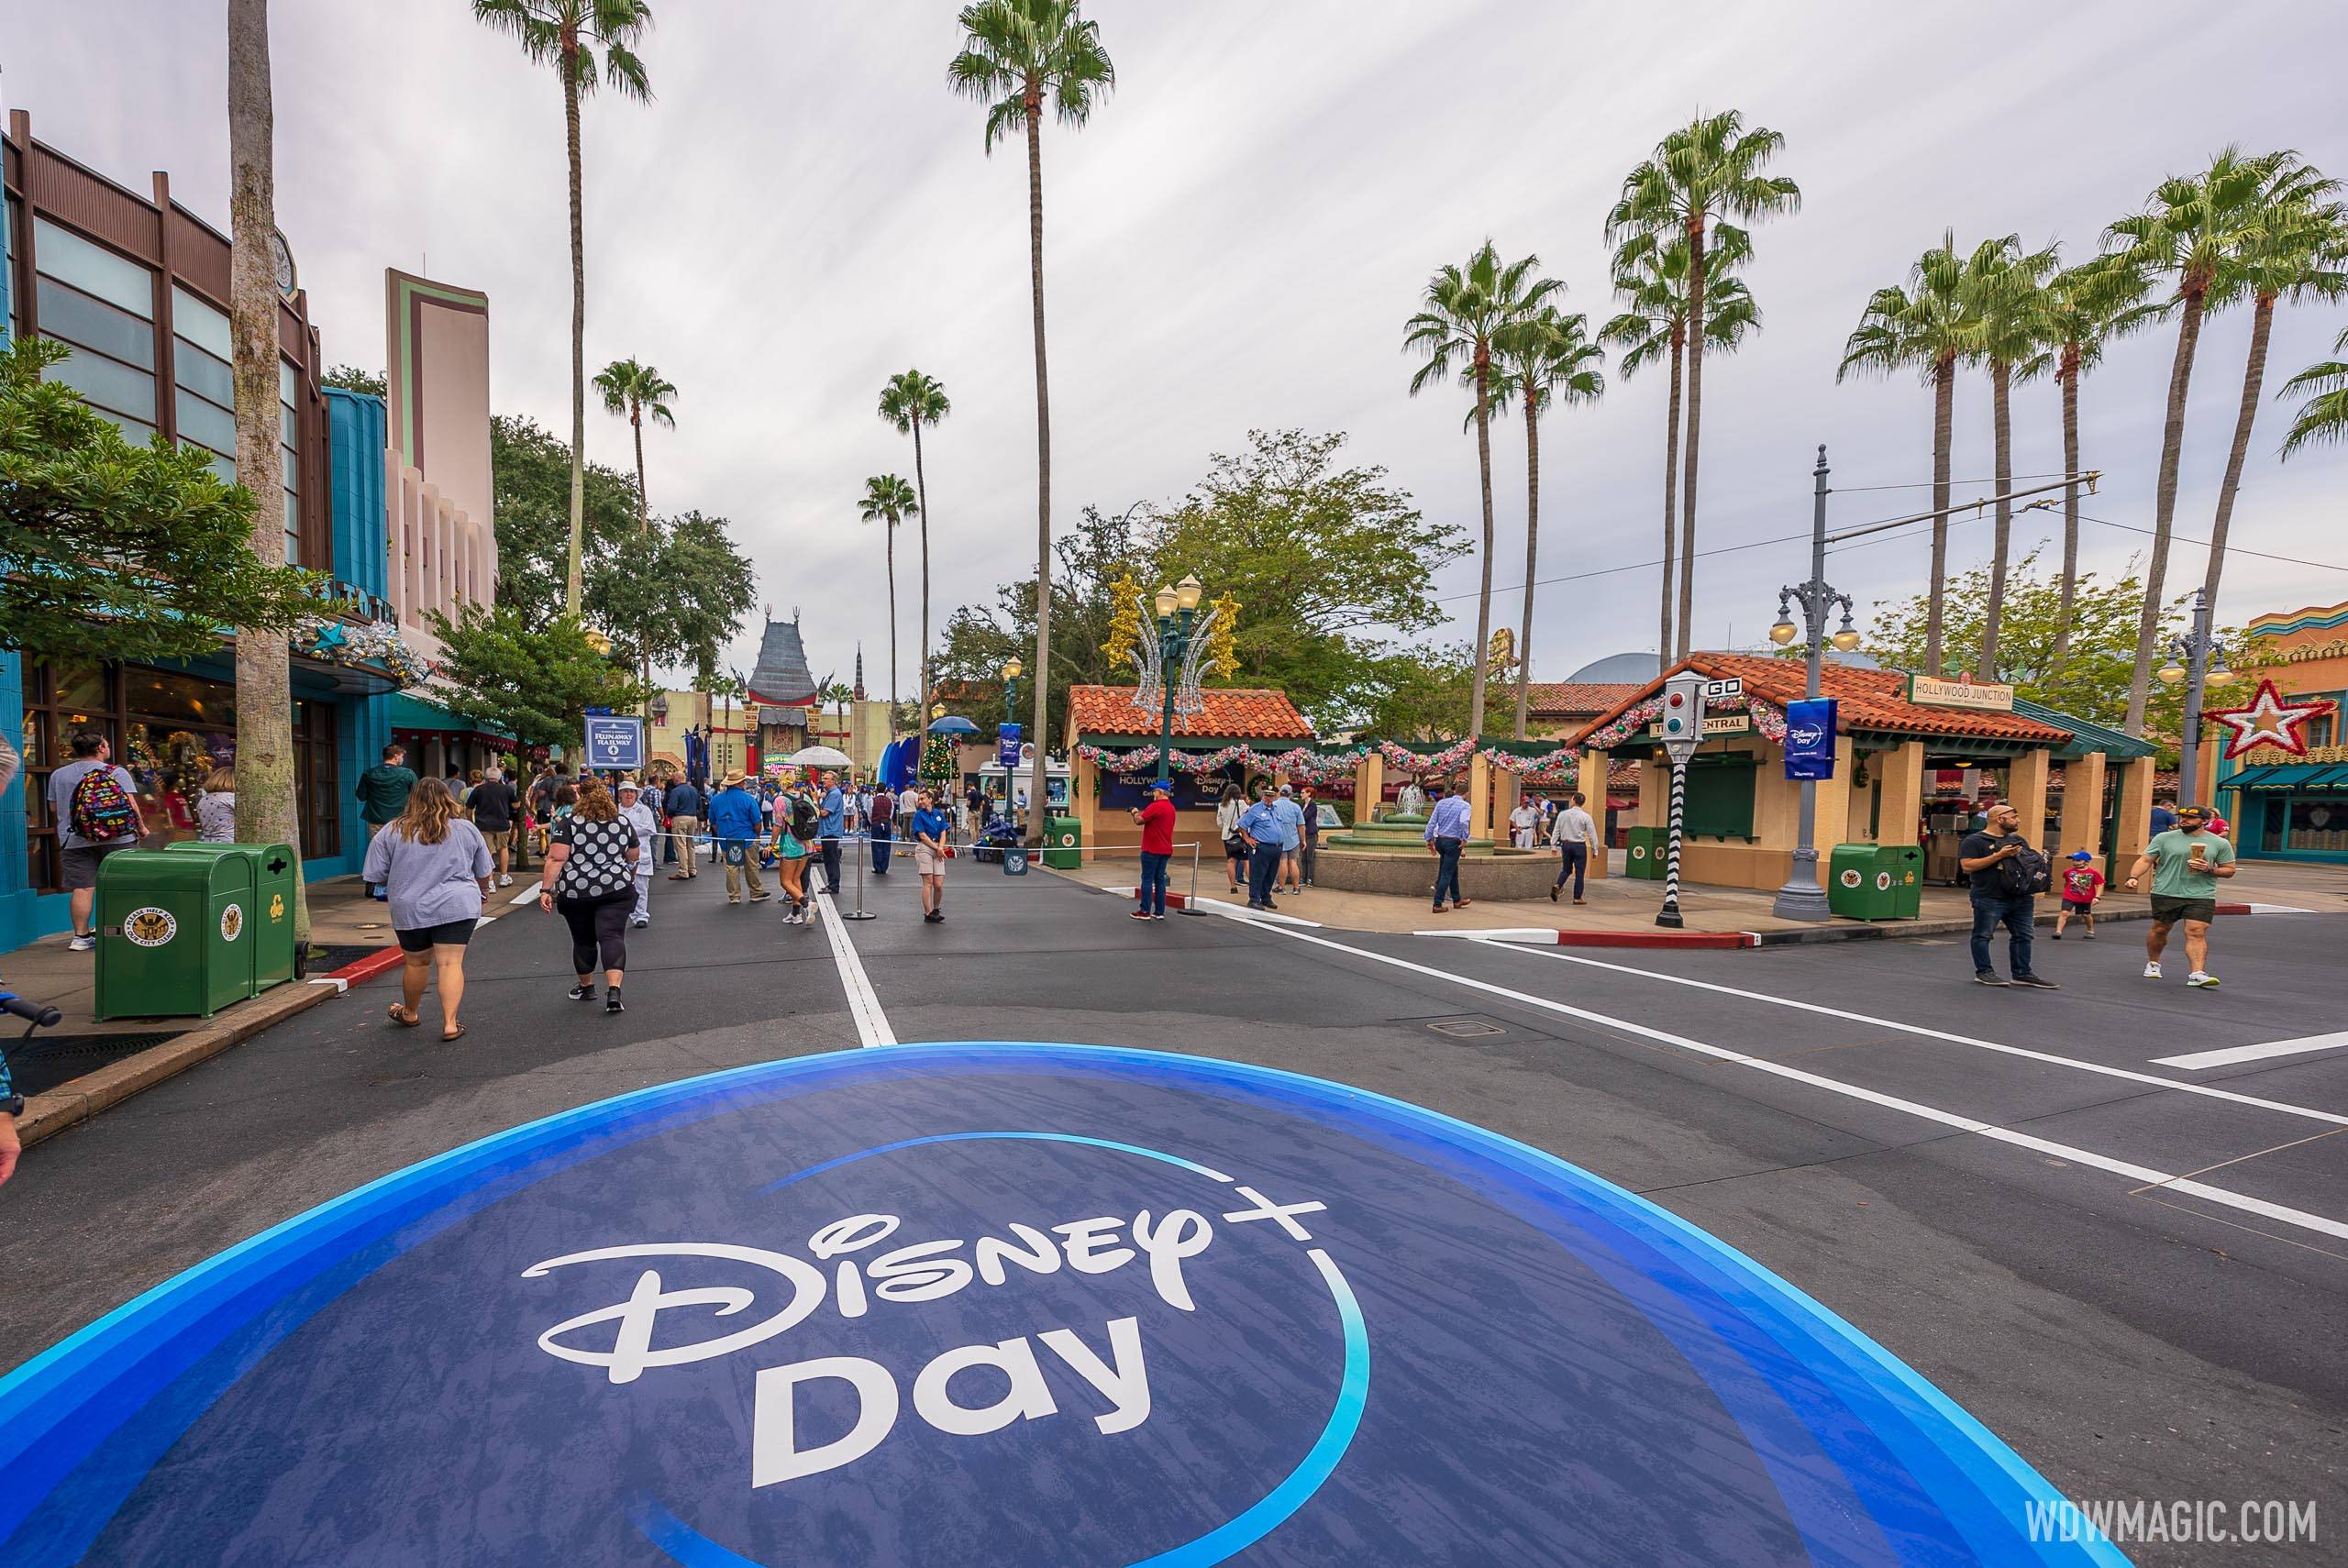 Giveaways, R2-D2, and enhanced motorcades headline Disney+ Day at Disney's Hollywood Studios